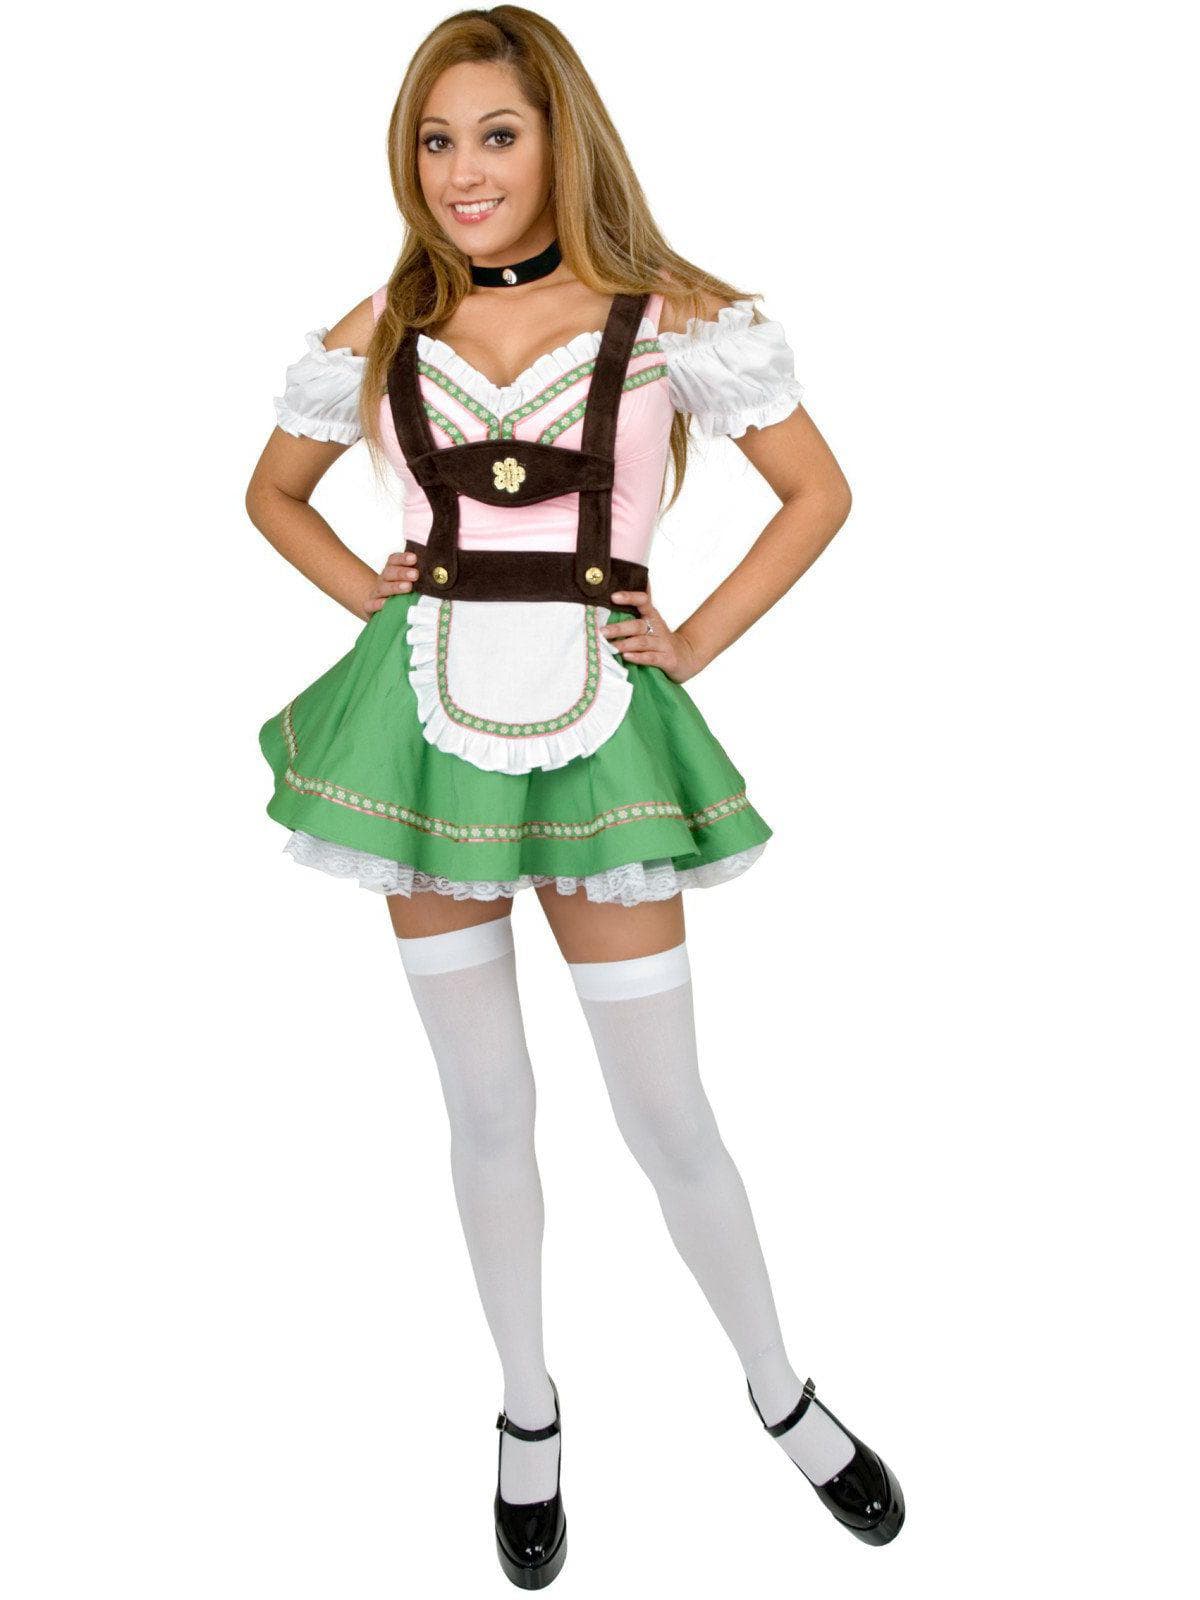 Adult Bavarian Maiden Costume - costumes.com